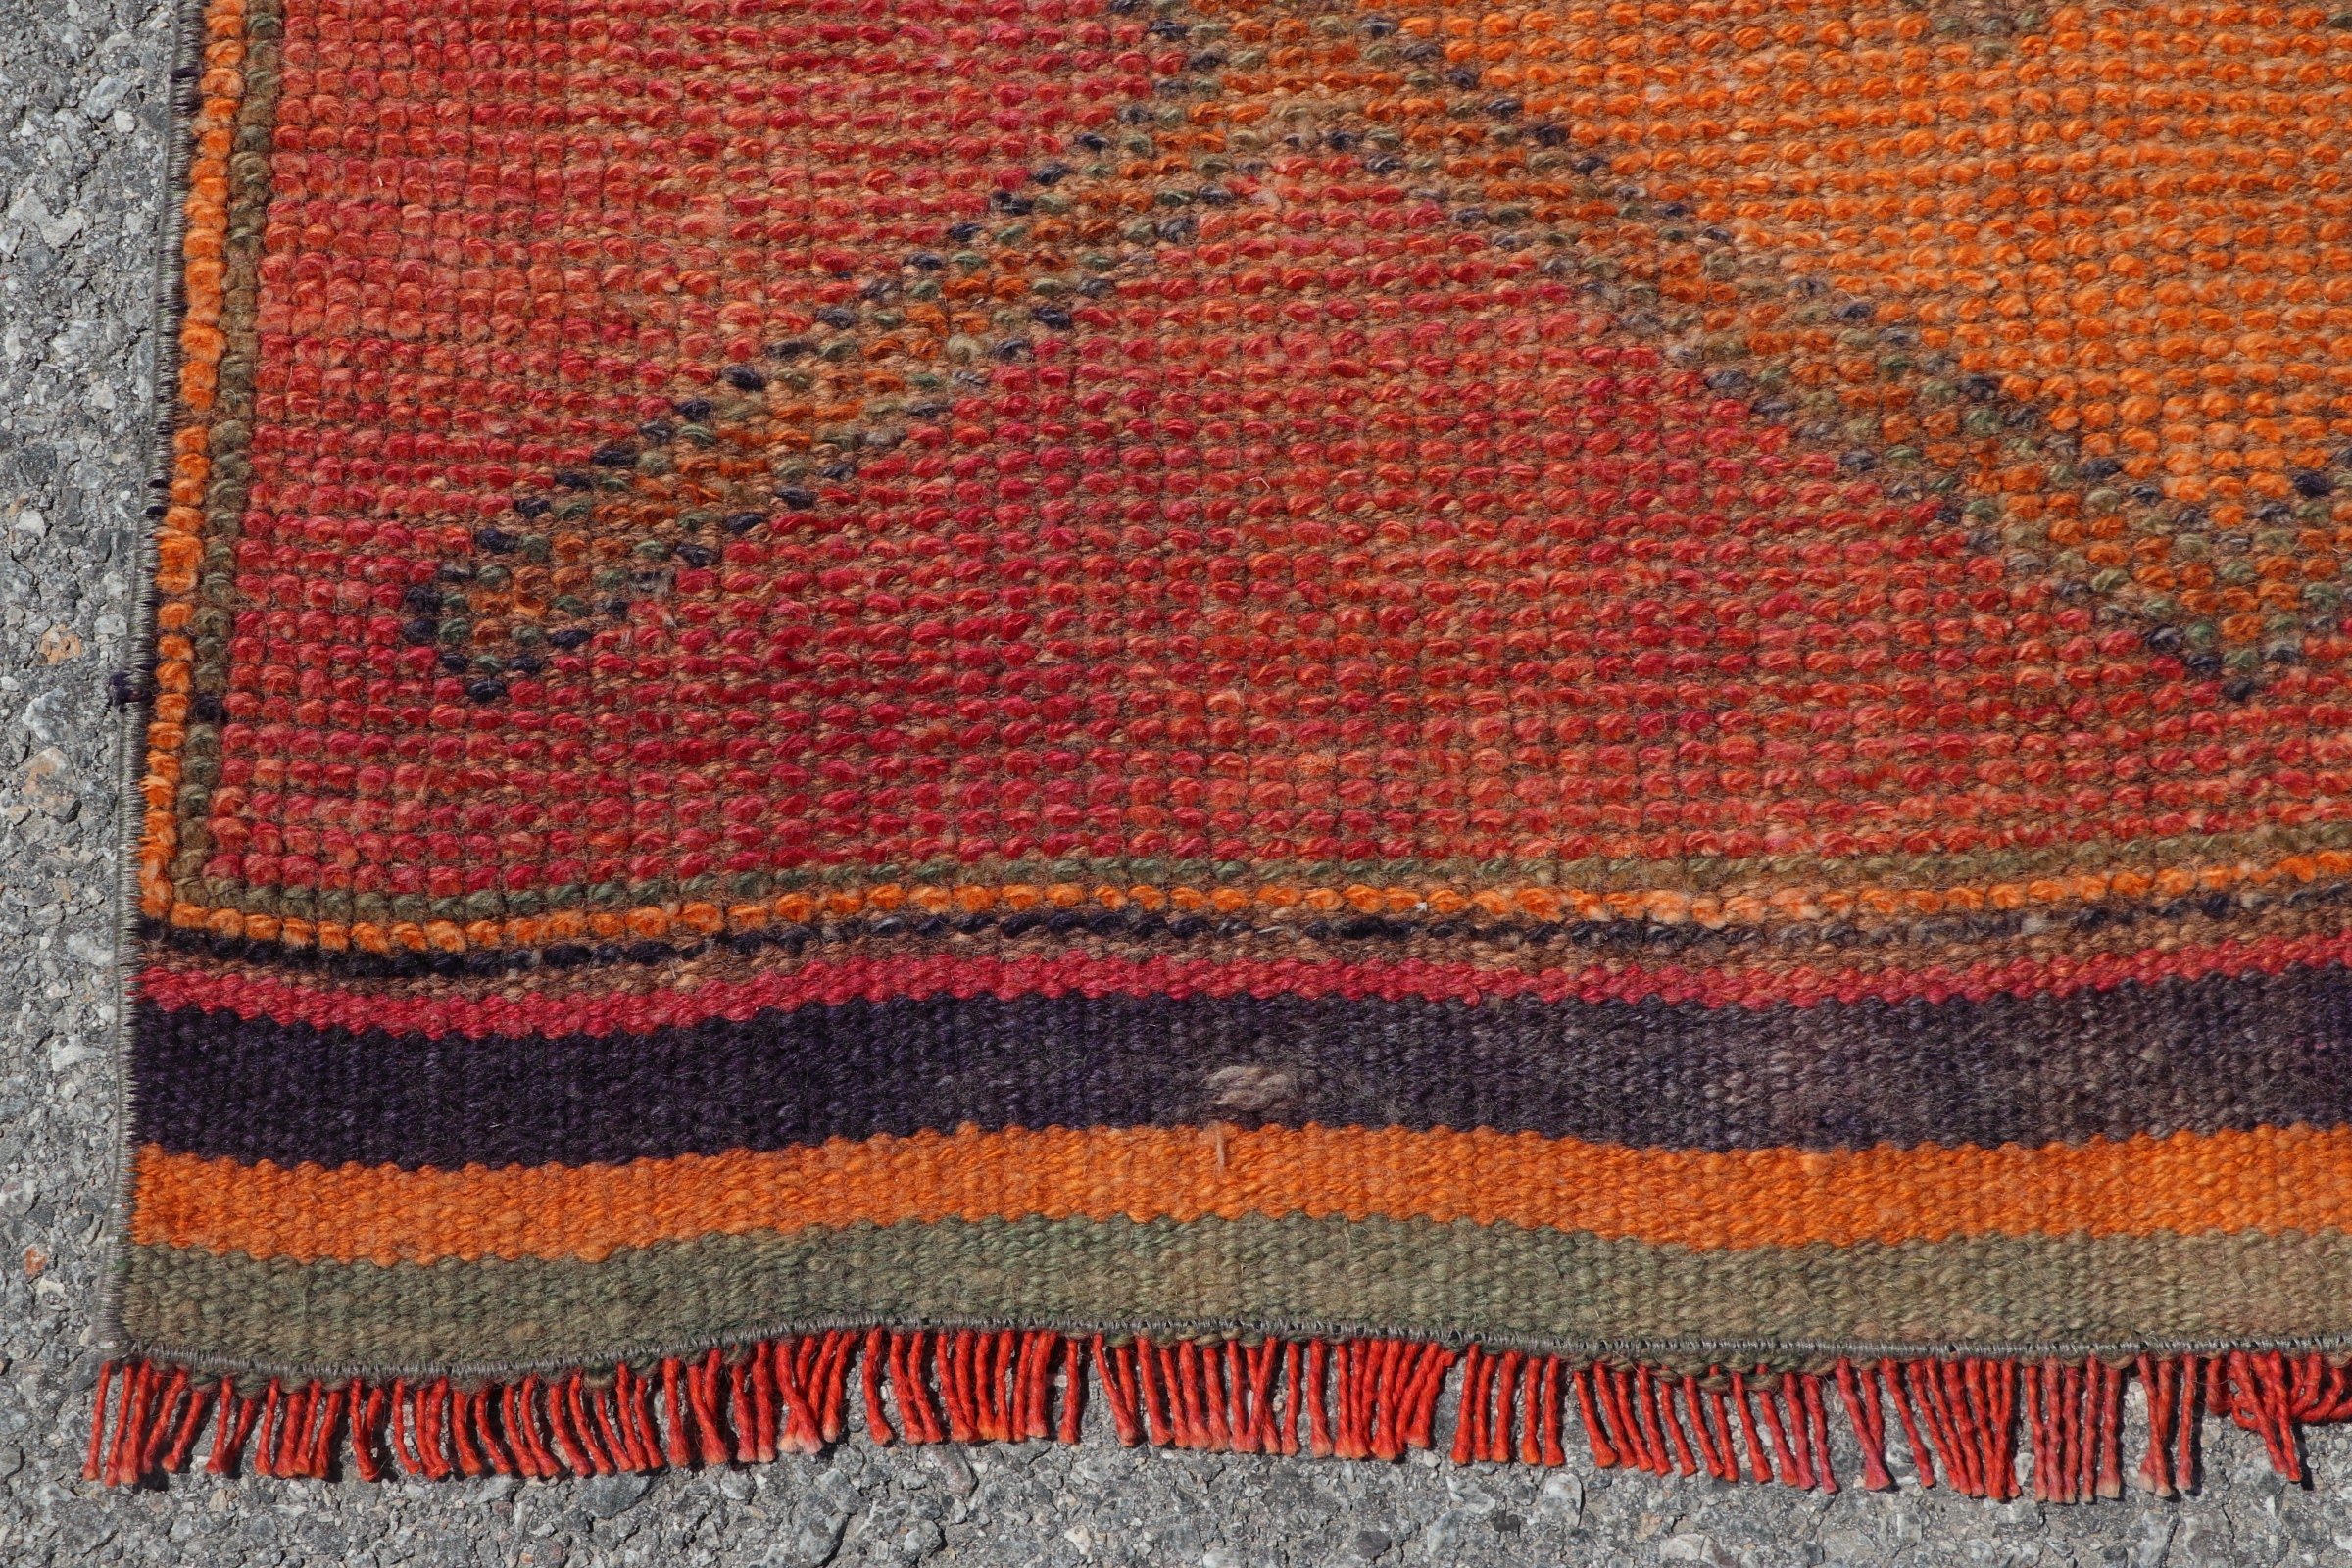 Moroccan Rug, Antique Rug, Orange Antique Rug, Rugs for Hallway, Tribal Rugs, Corridor Rug, 3x10.5 ft Runner Rug, Turkish Rug, Vintage Rugs